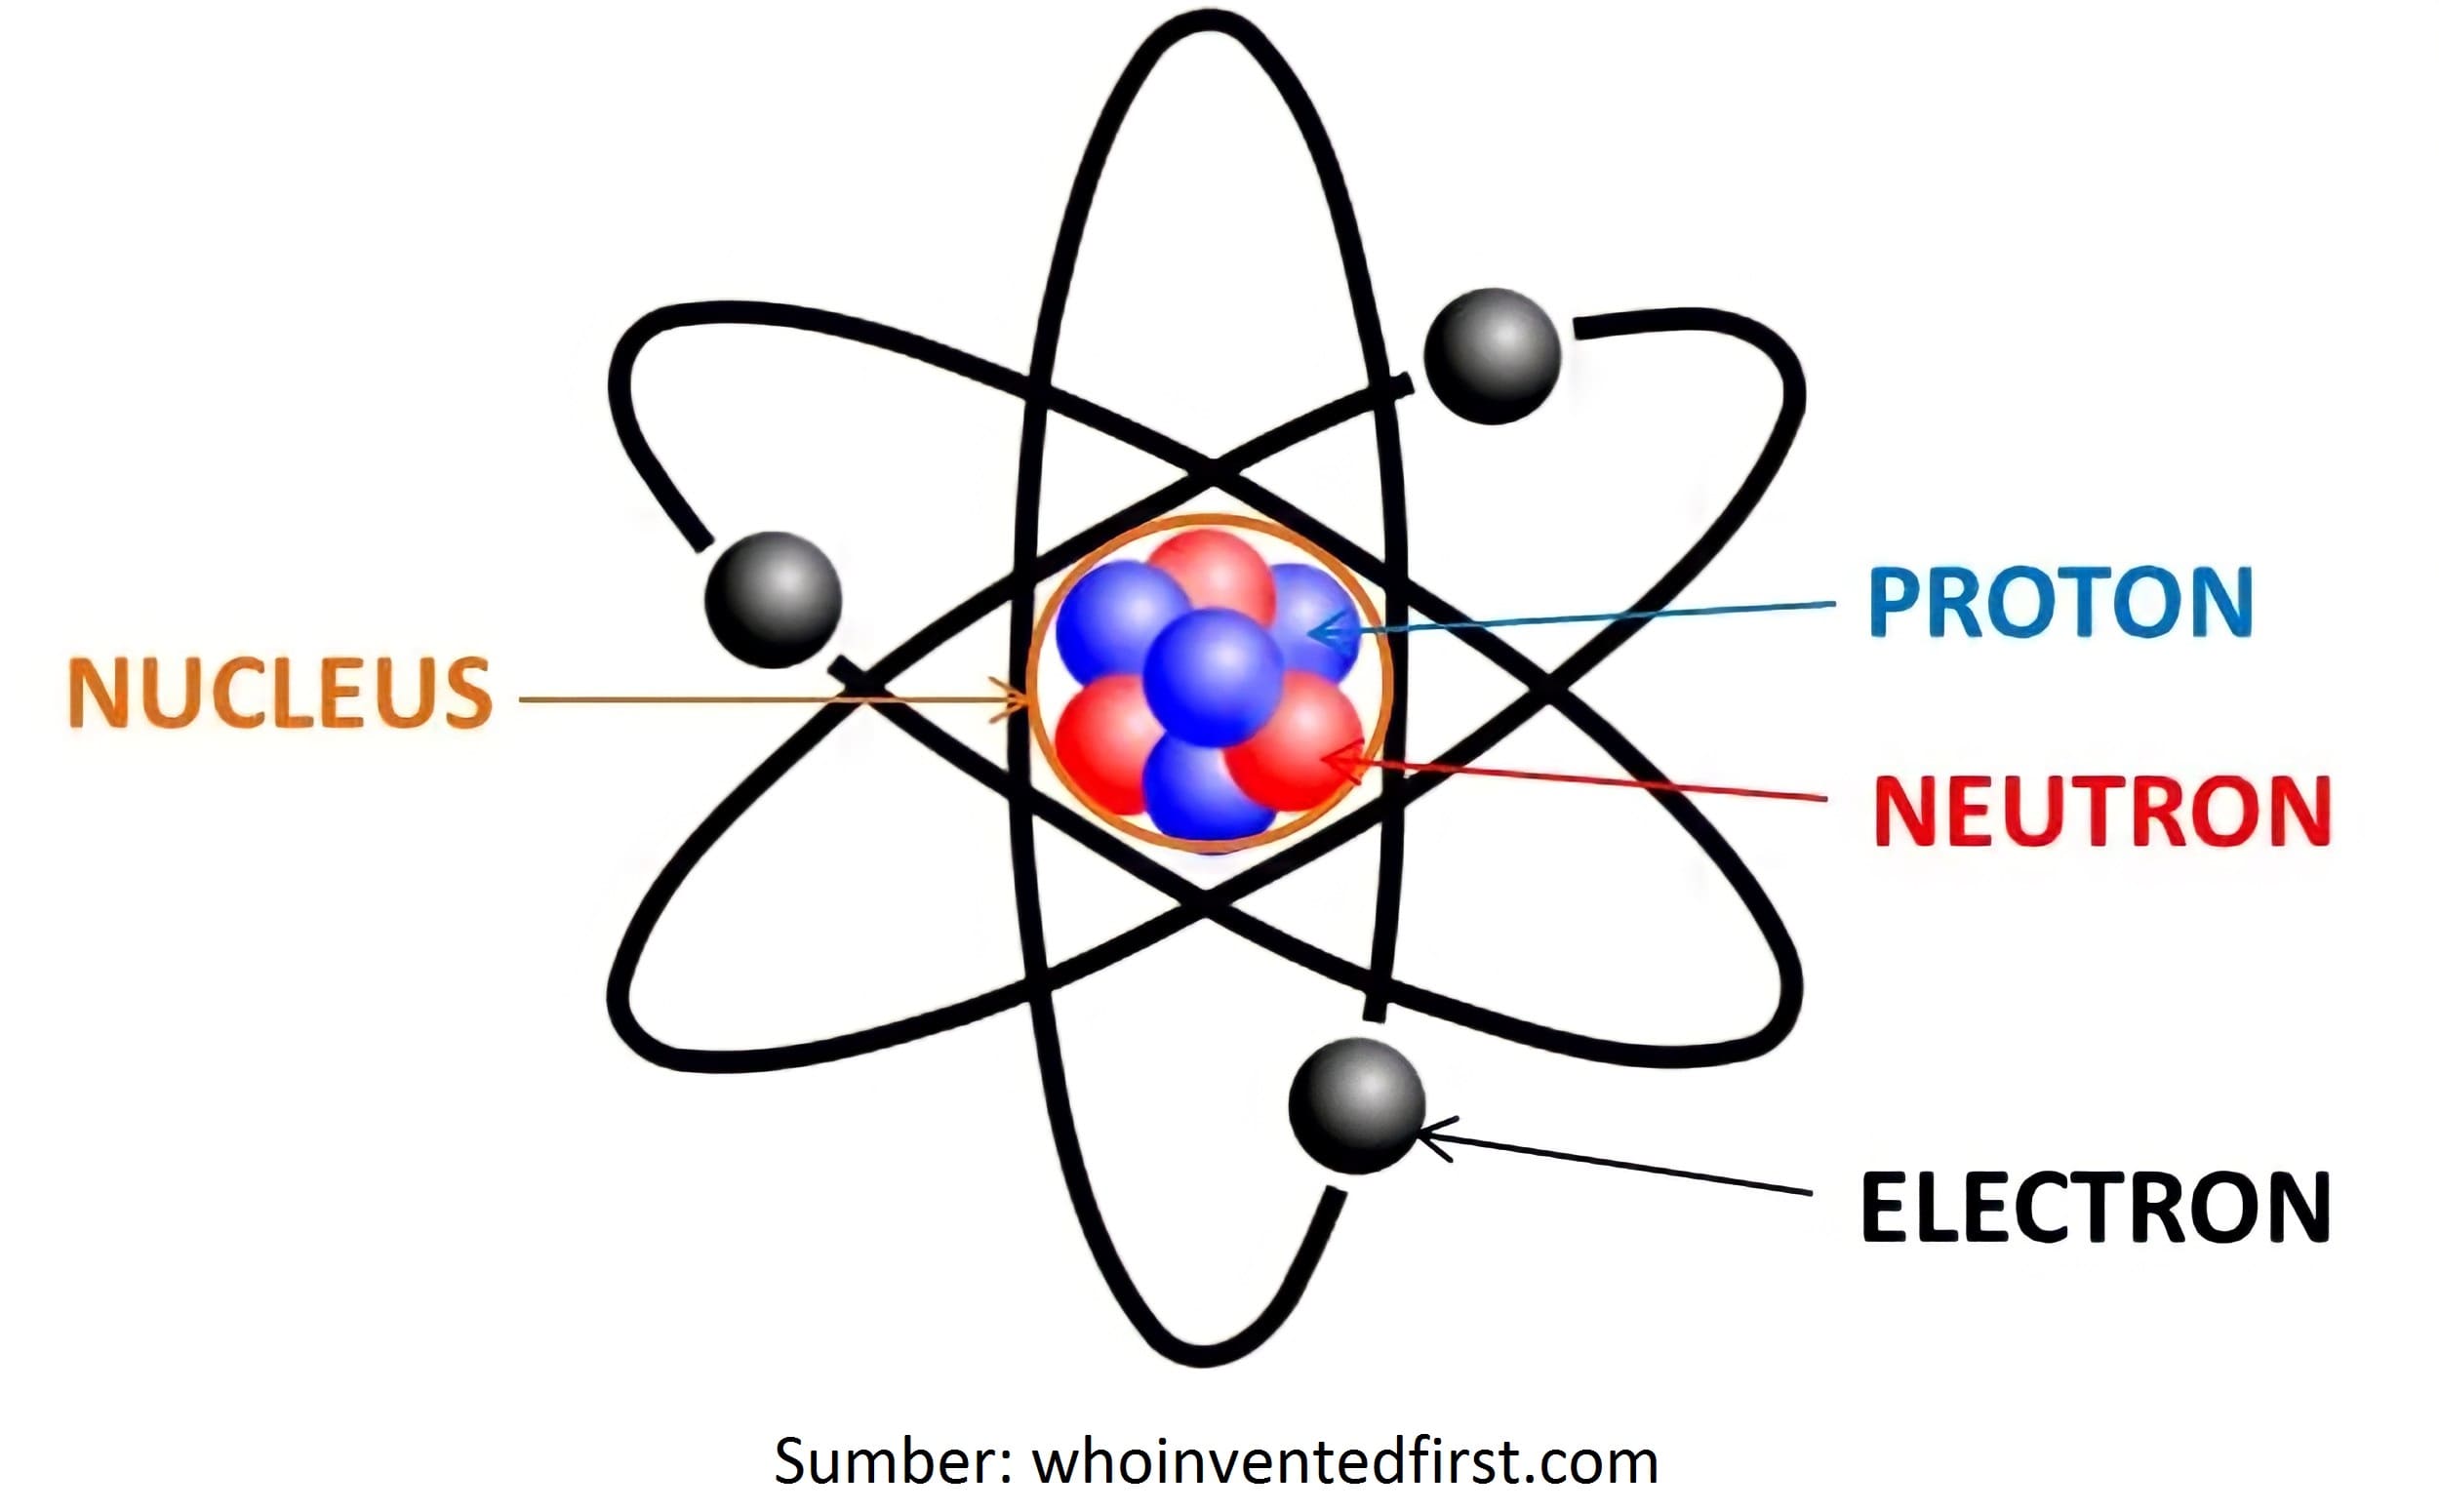 Partikel penyusun inti atom adalah